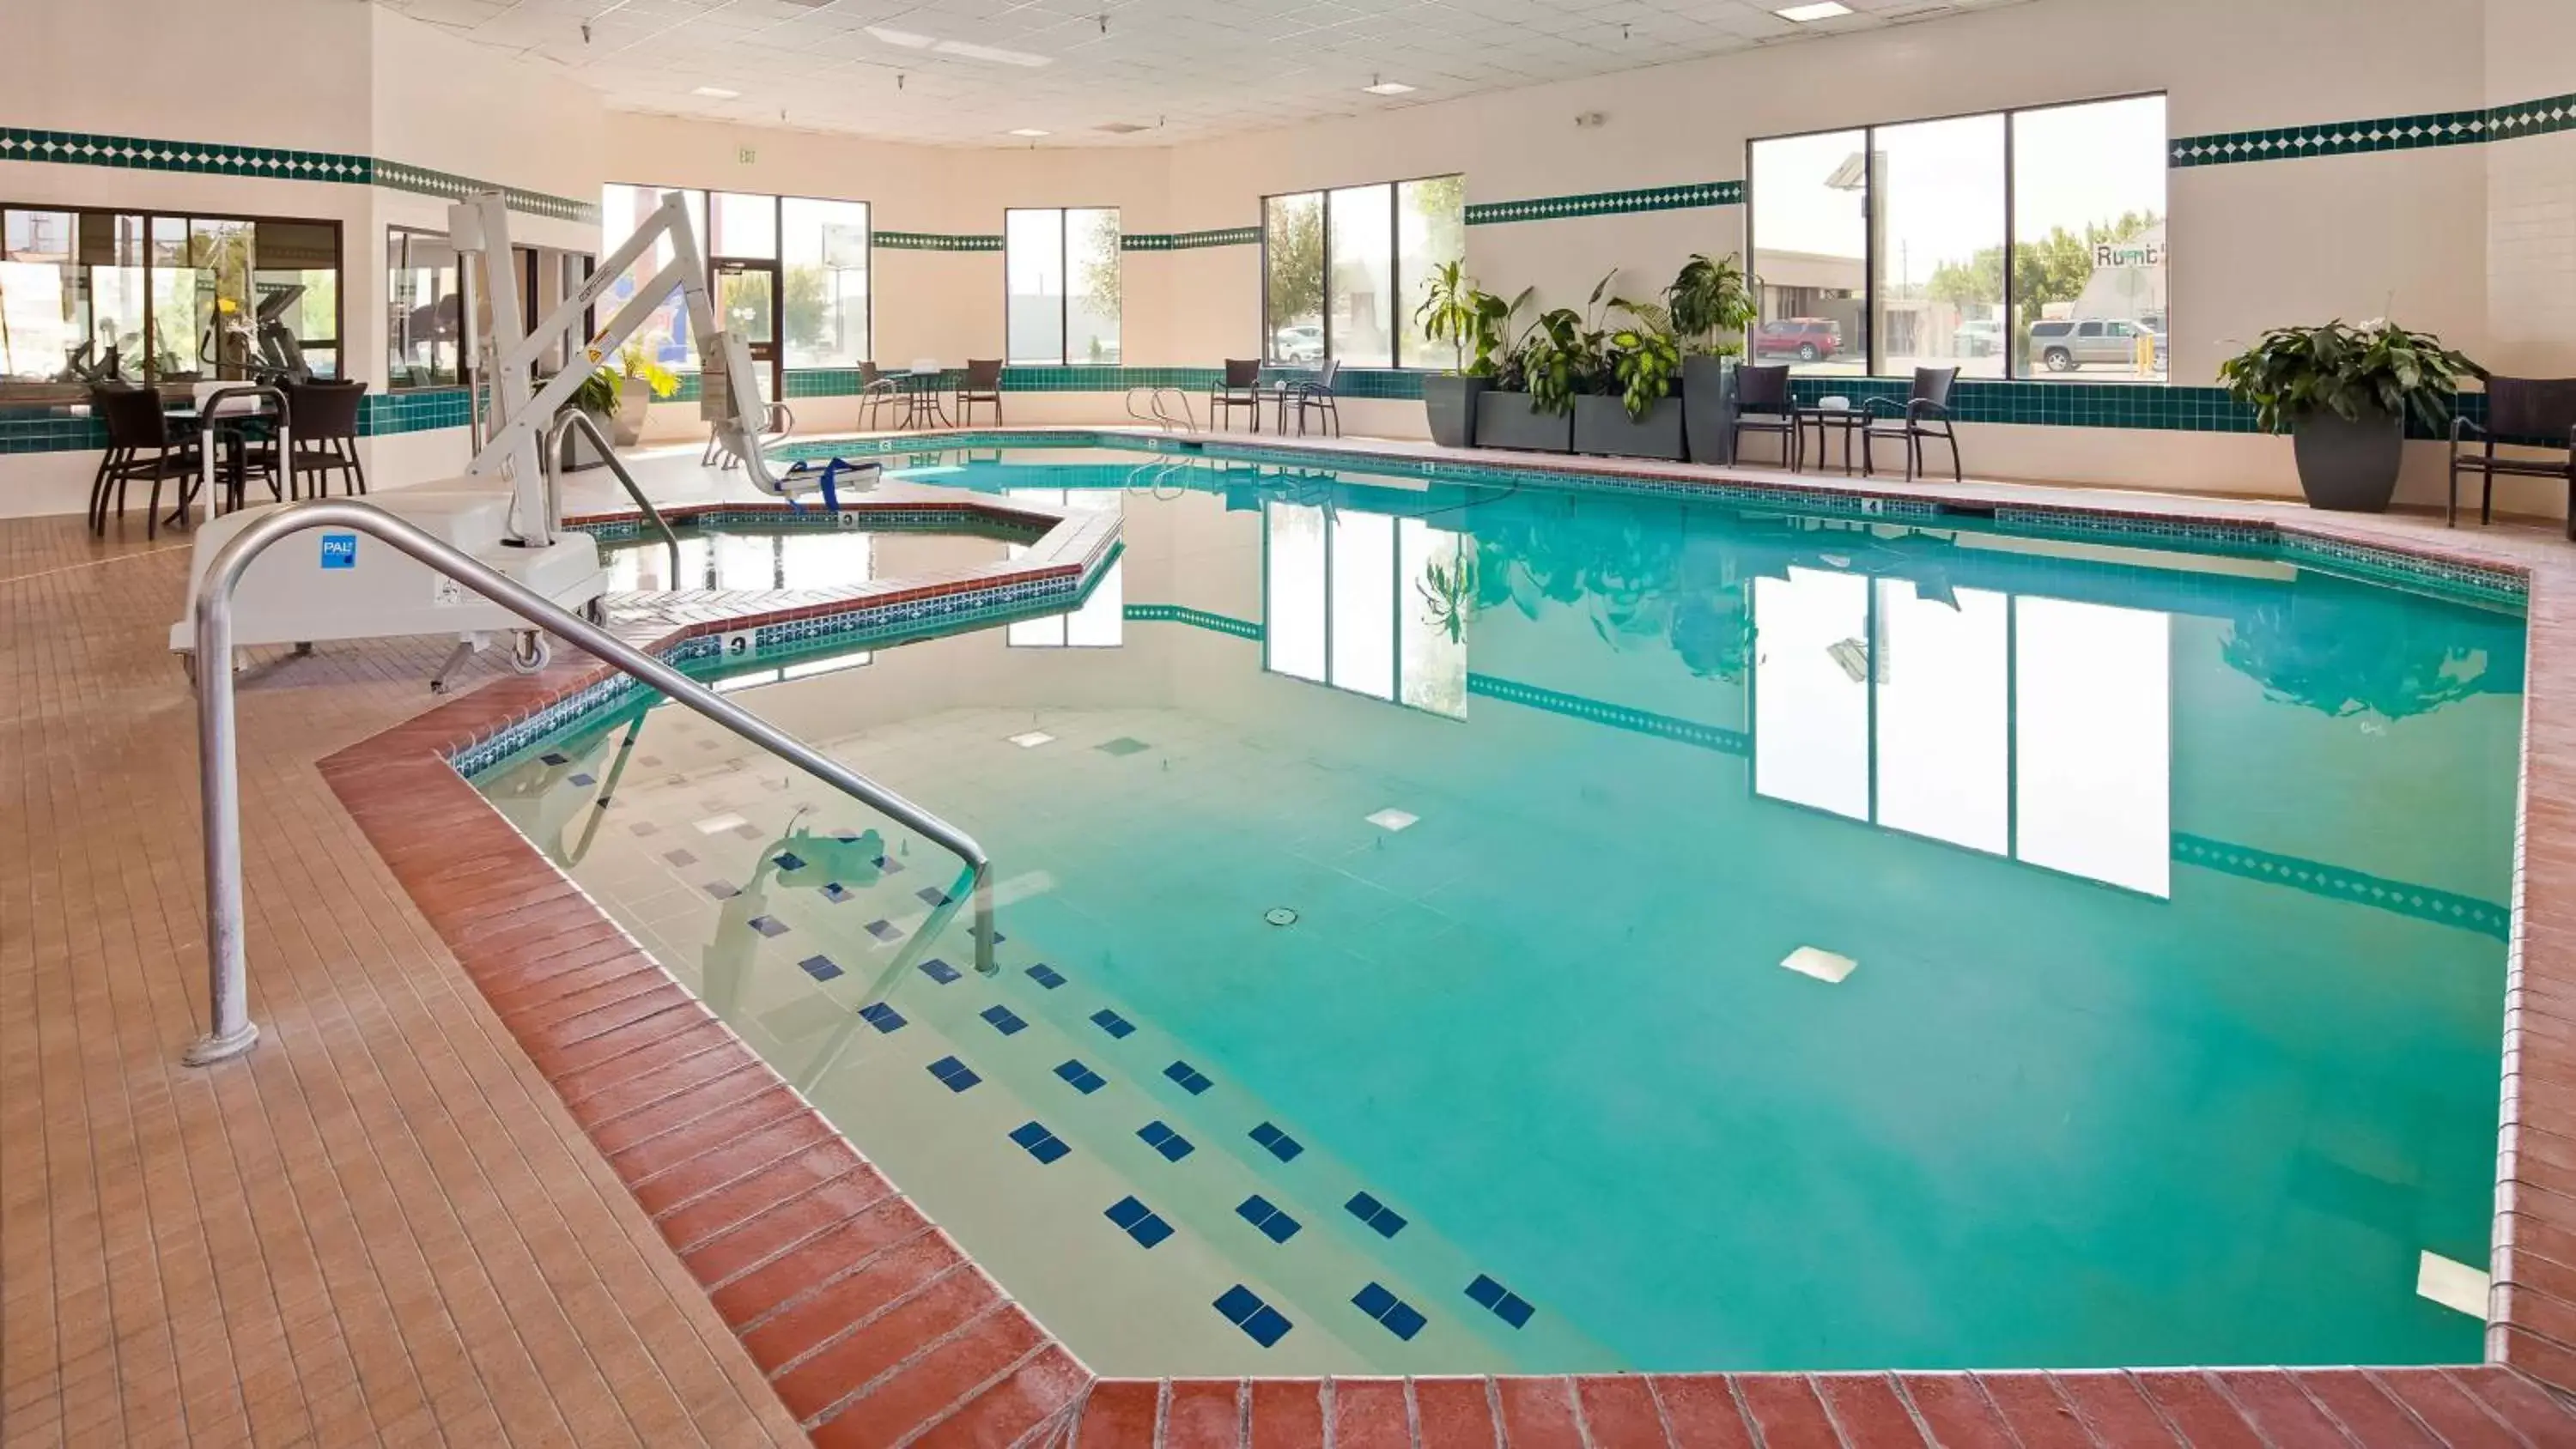 On site, Swimming Pool in Best Western Plus CottonTree Inn